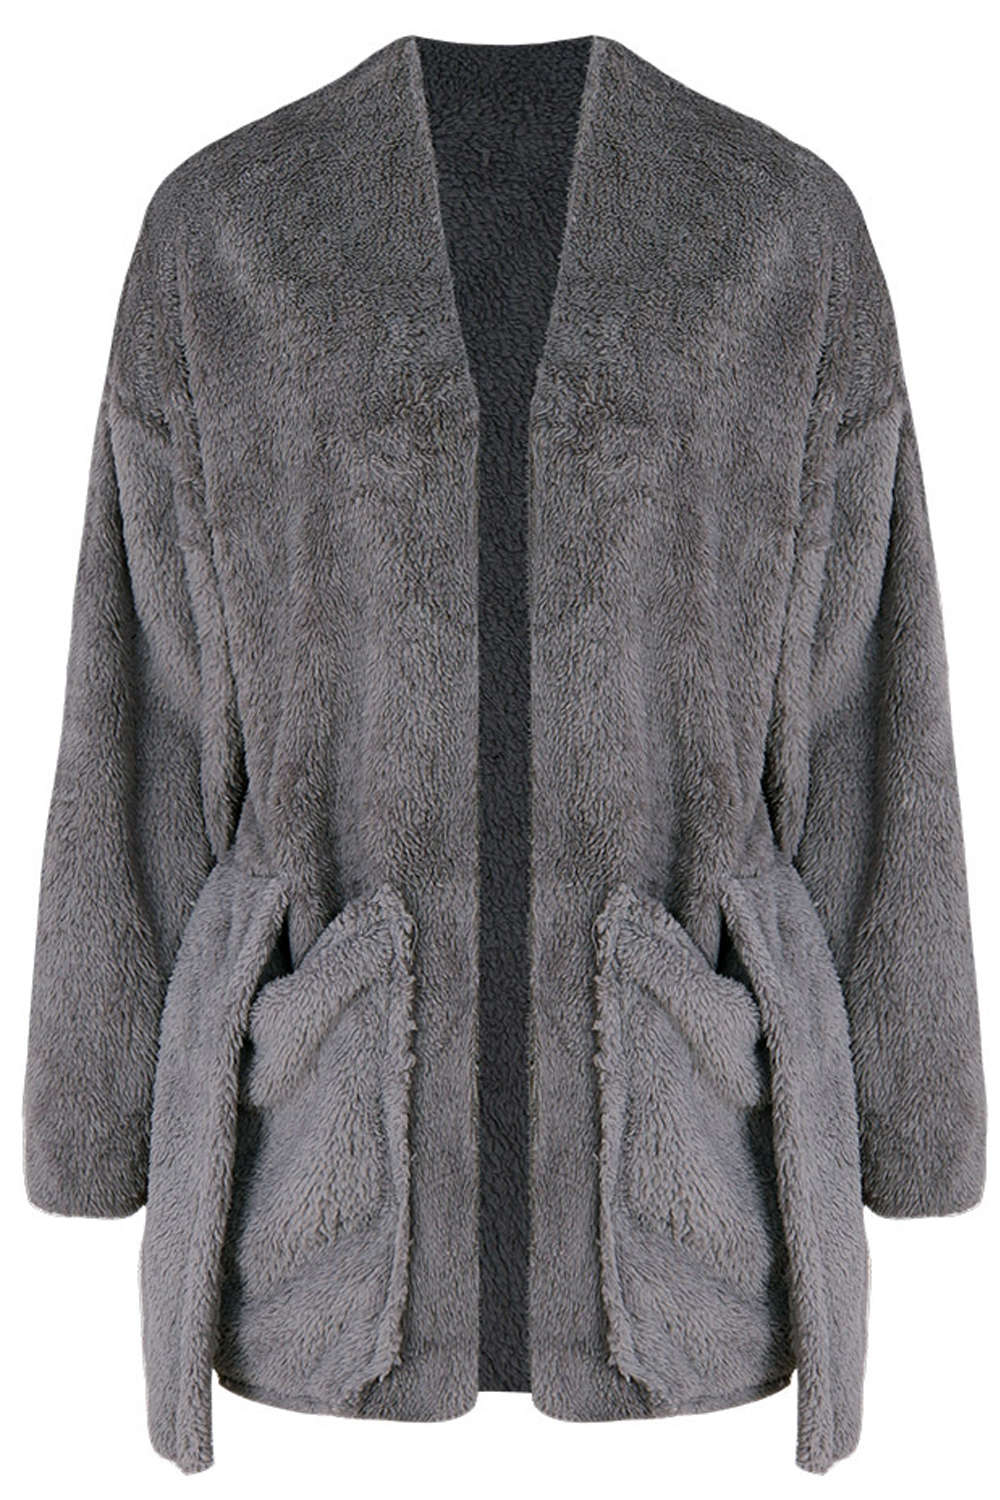 Iyasson Fuzzy Velvet Open Front Coat with Hood